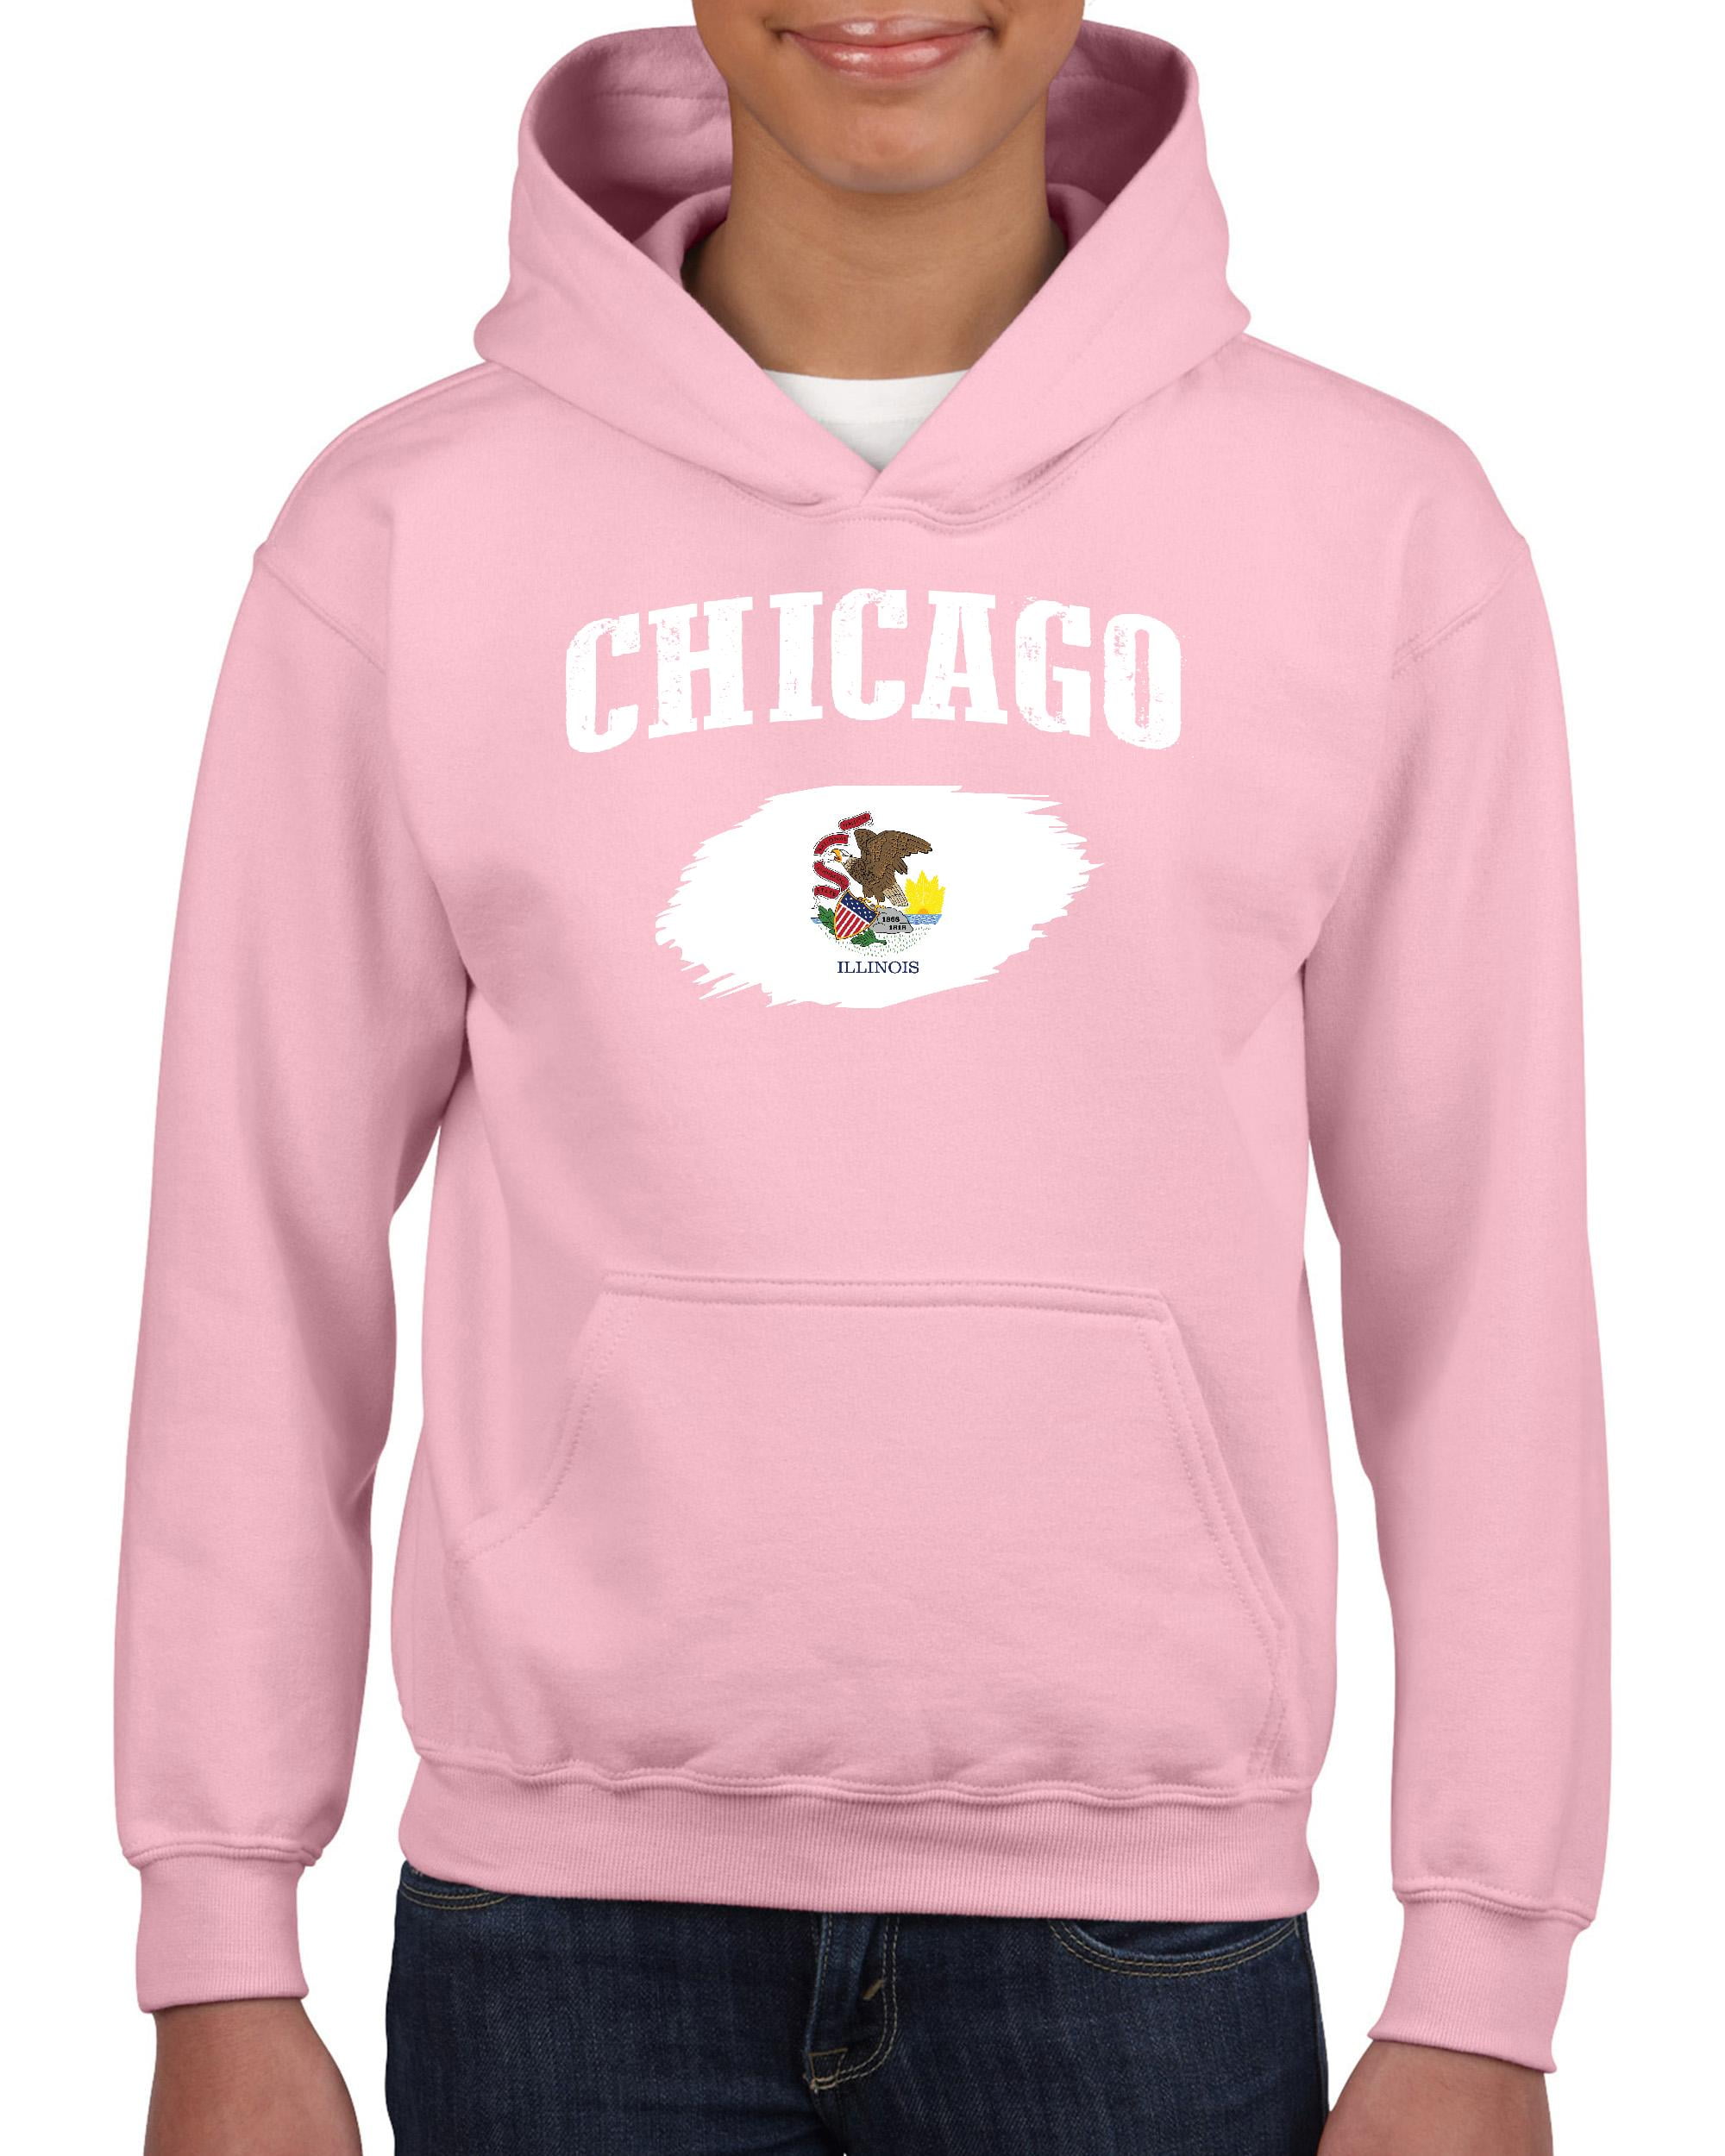 Chicago Illinois Youth Hoodie Hooded Sweatshirt 